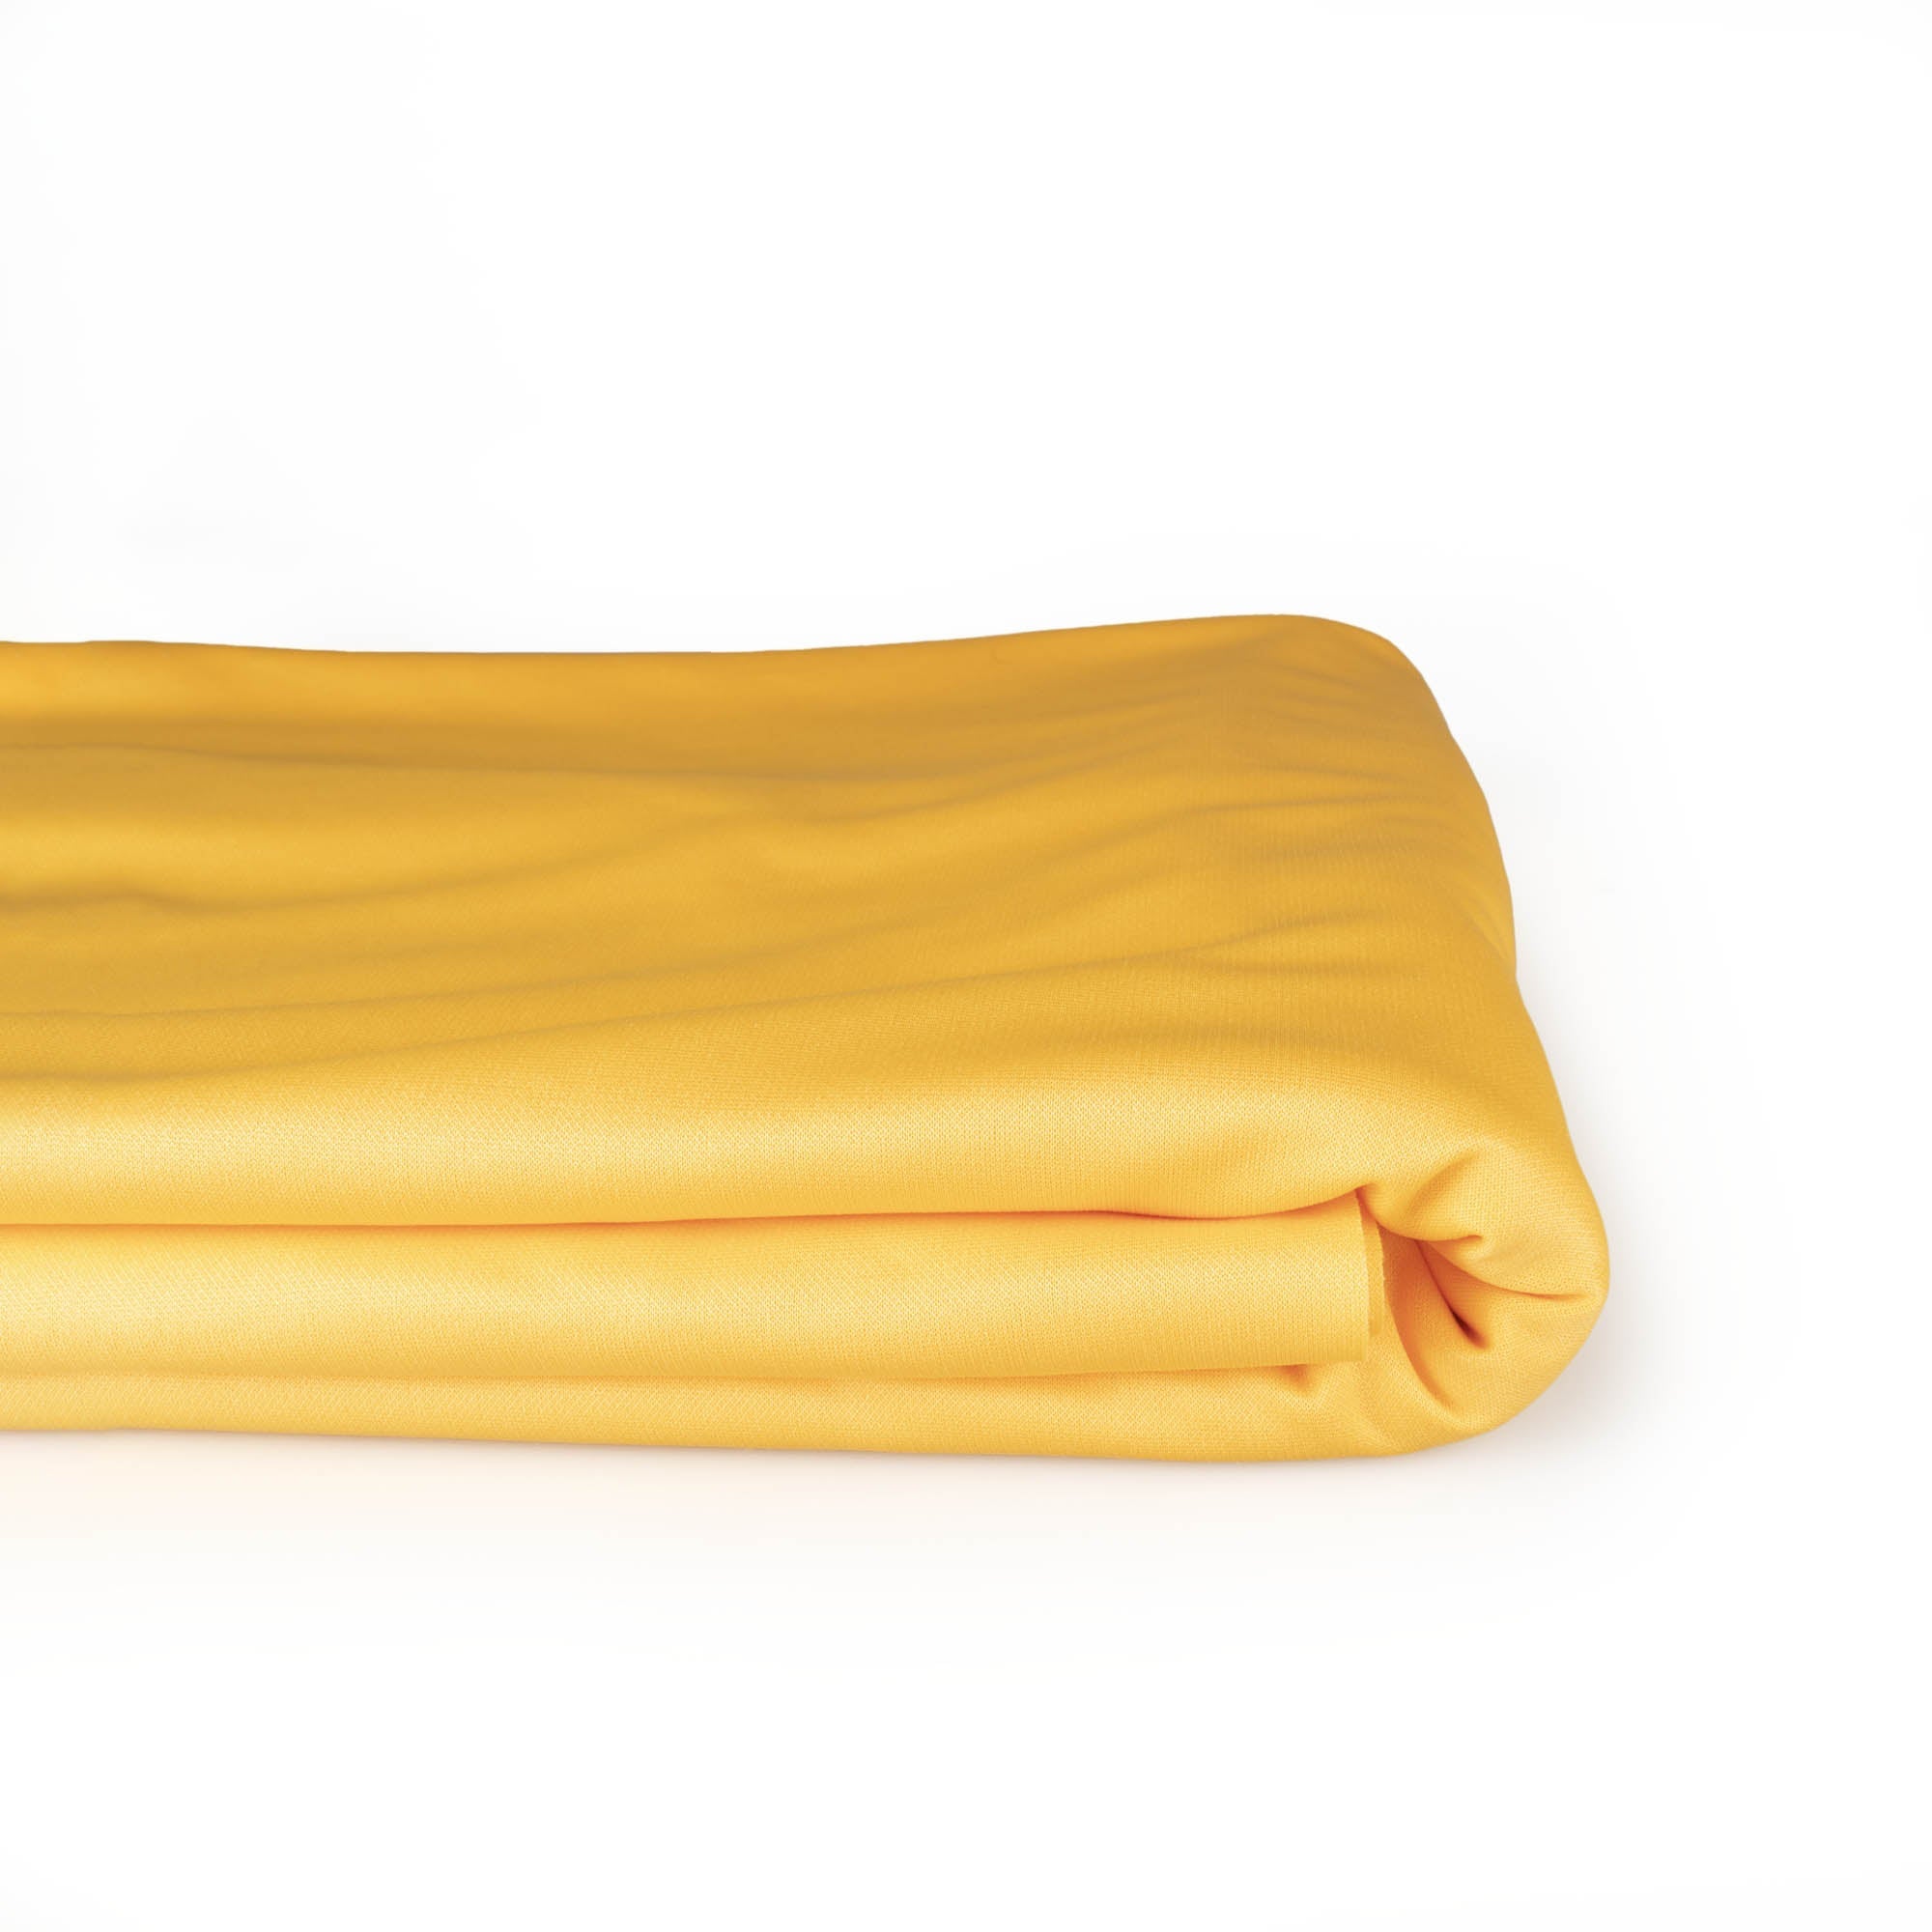 Golden yellow silk folded